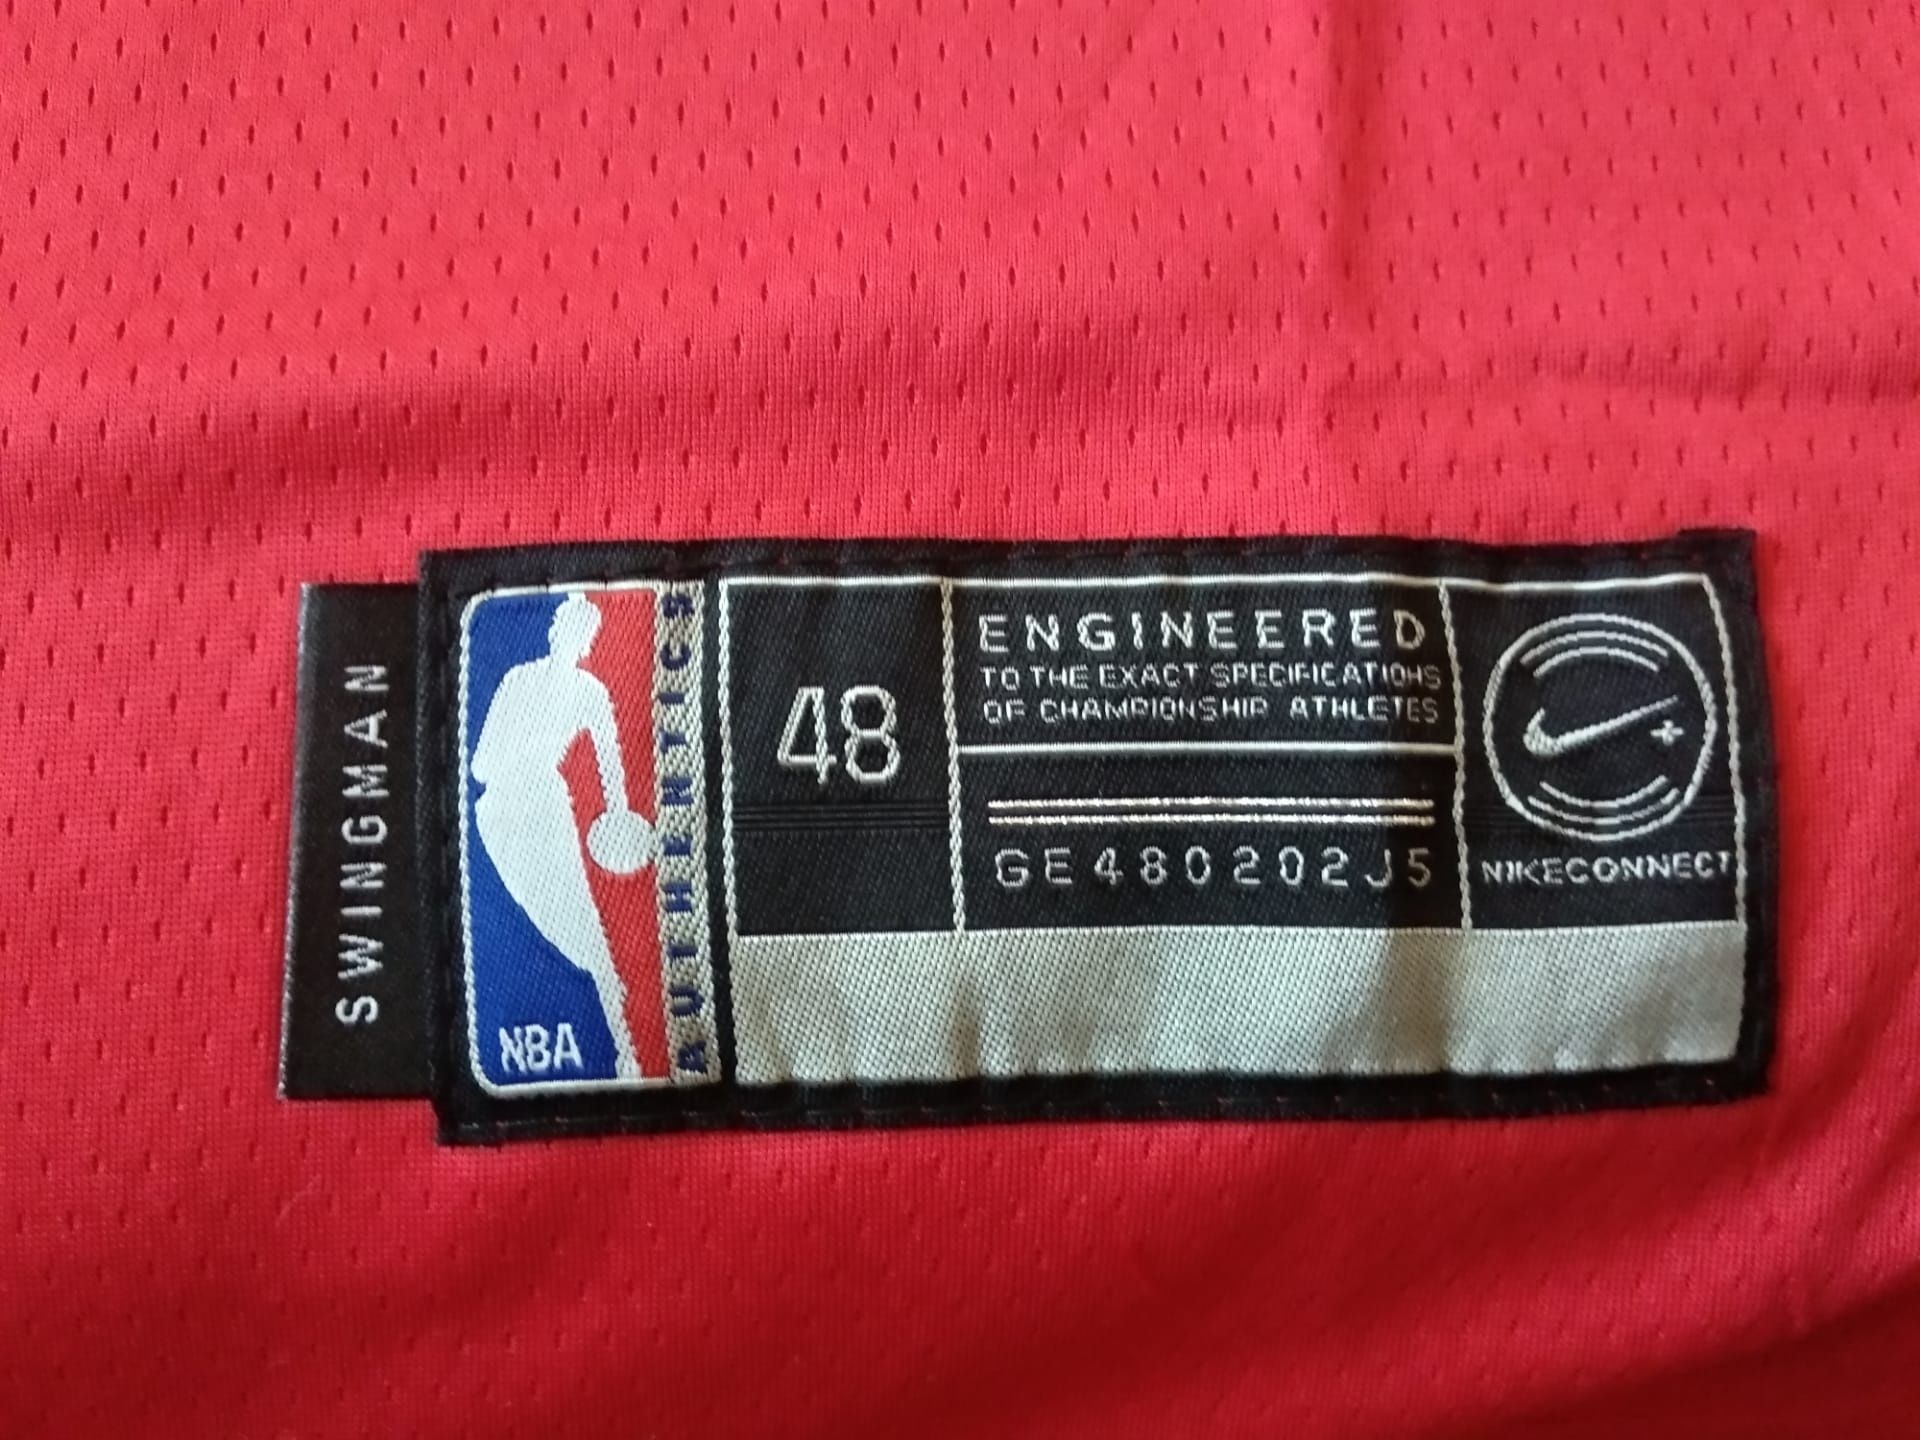 Camisola NBA Chicago Bulls tamanho Nike e Mitchell and ness (Stock)